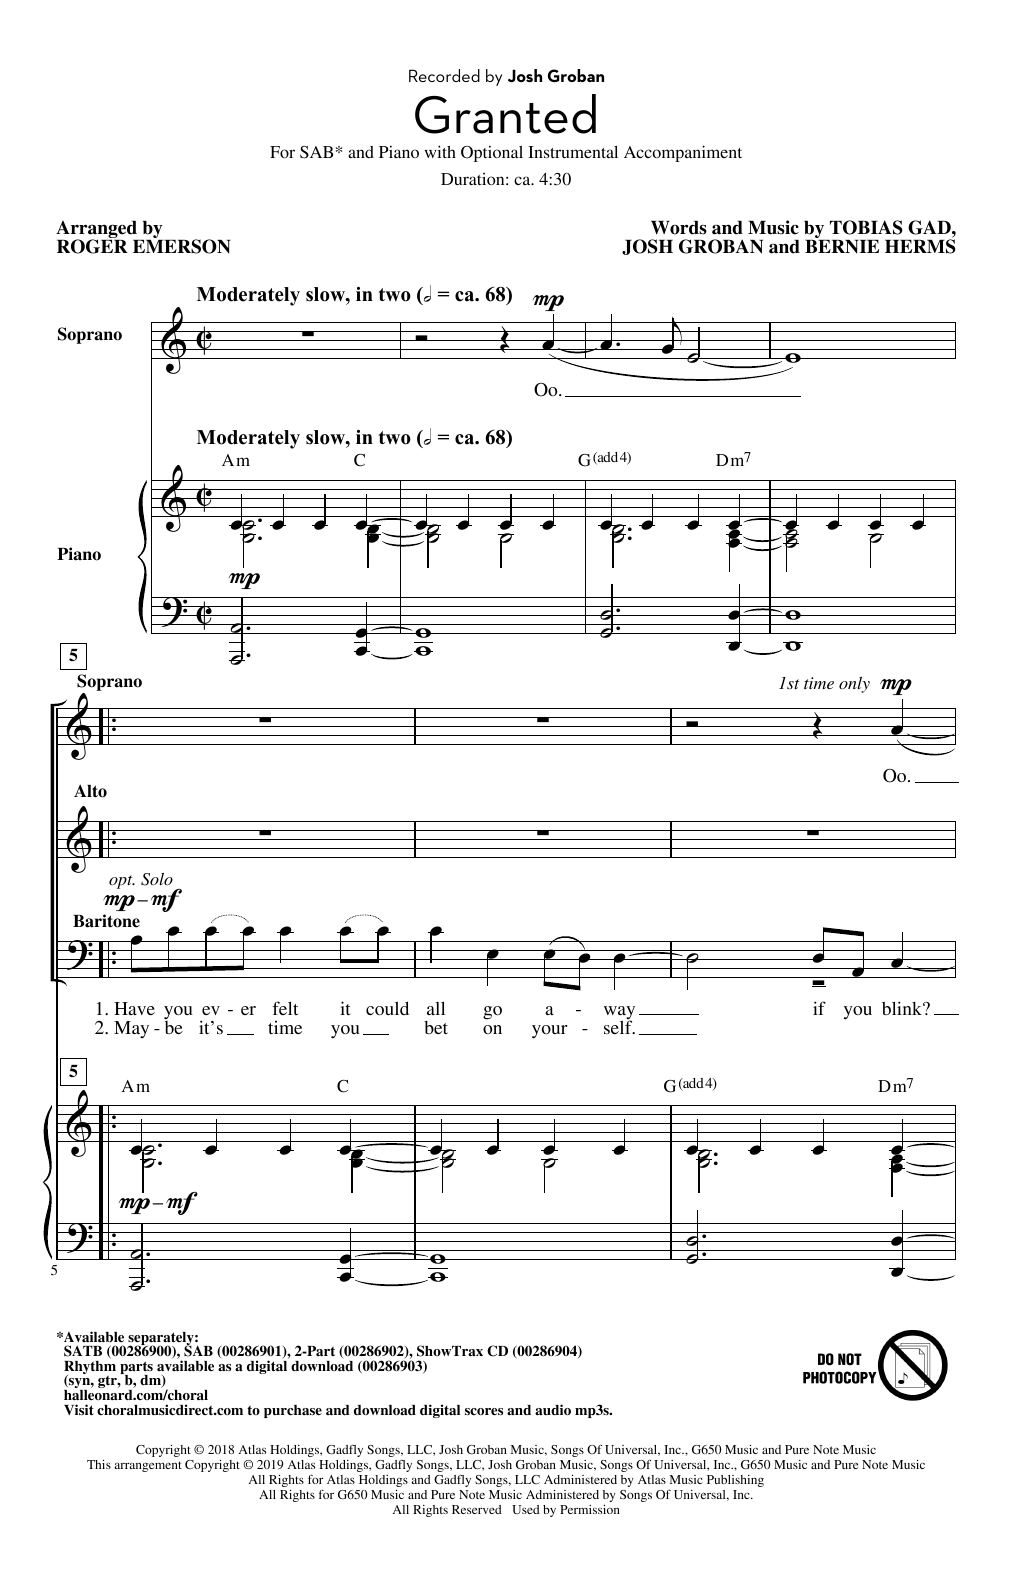 Josh Groban Granted (arr. Roger Emerson) Sheet Music Notes & Chords for SAB Choir - Download or Print PDF